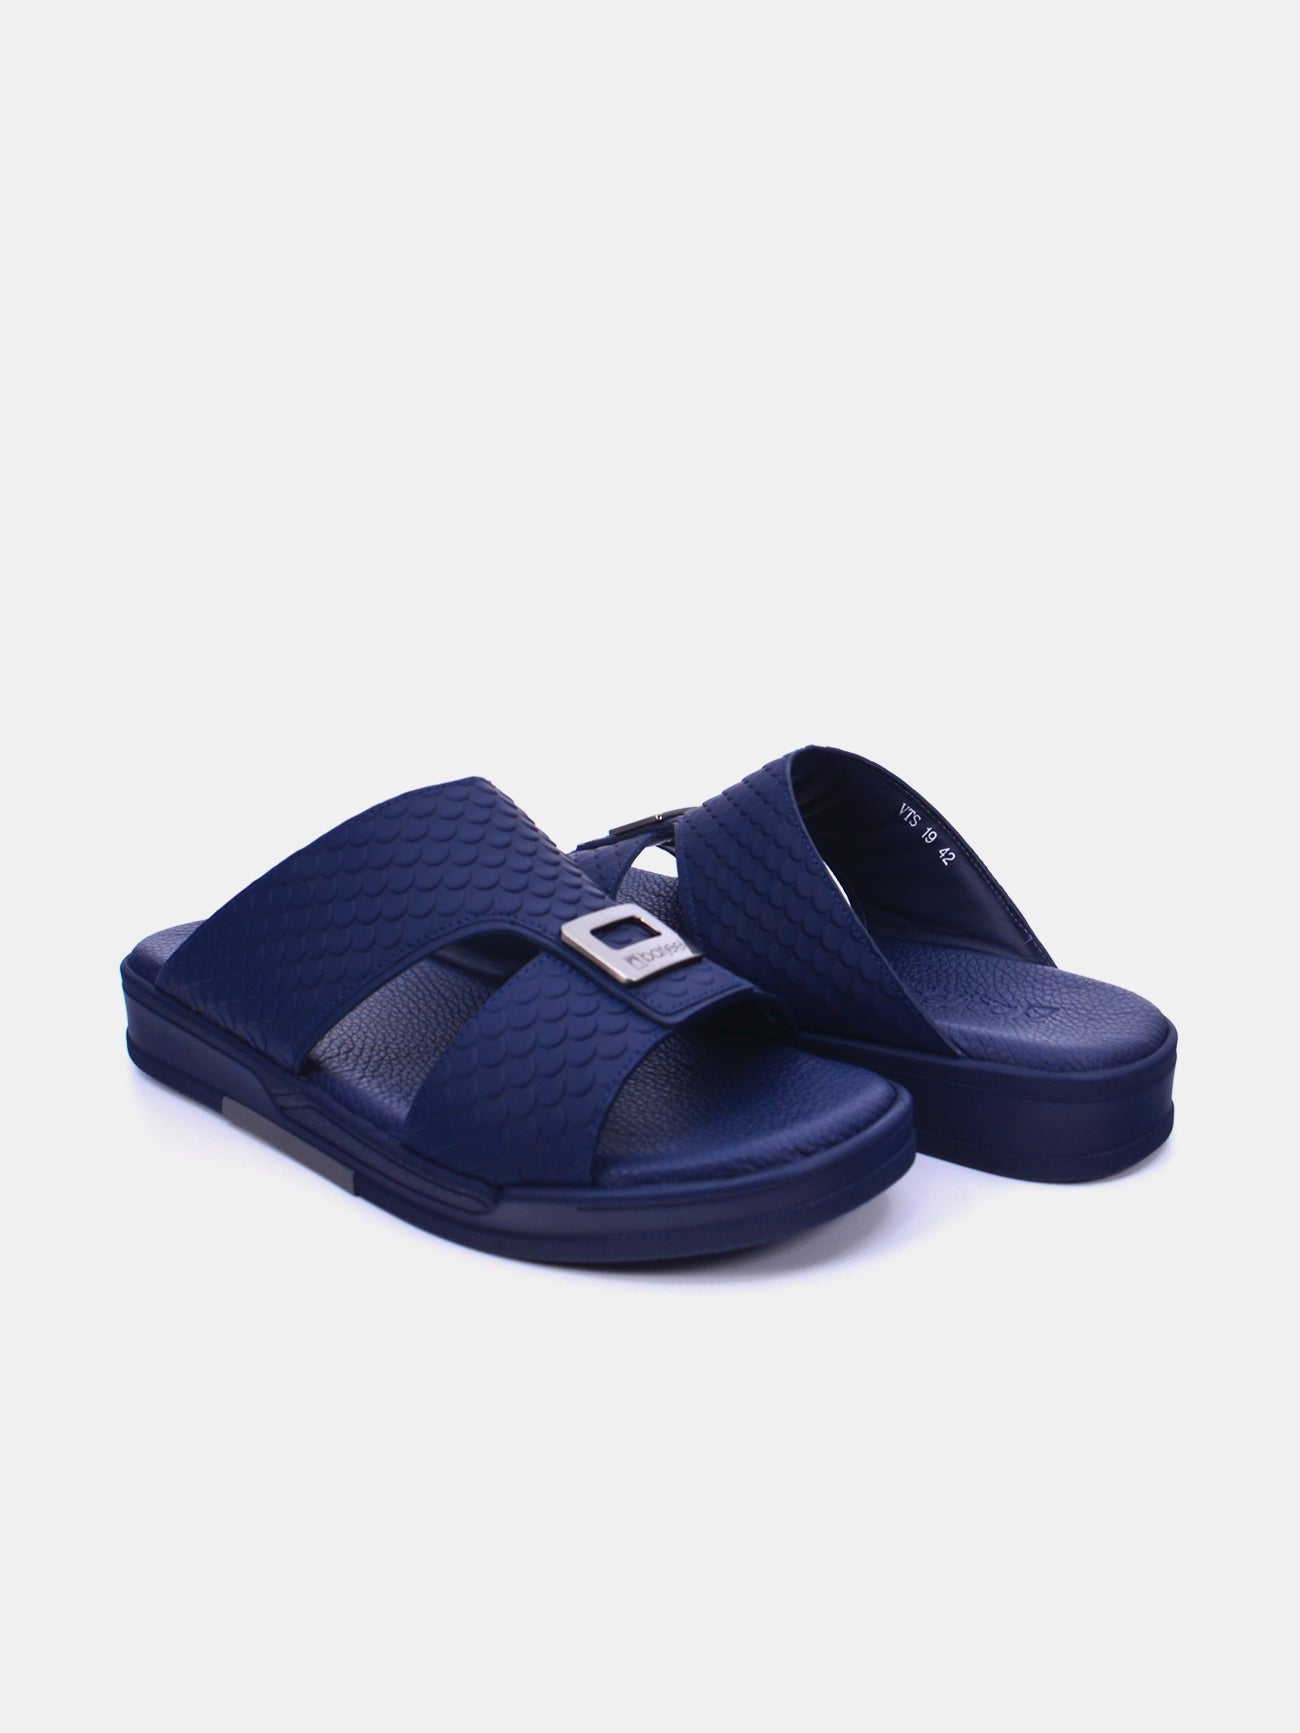 Barjeel Uno VTS 19 Men's Sandals #color_Navy